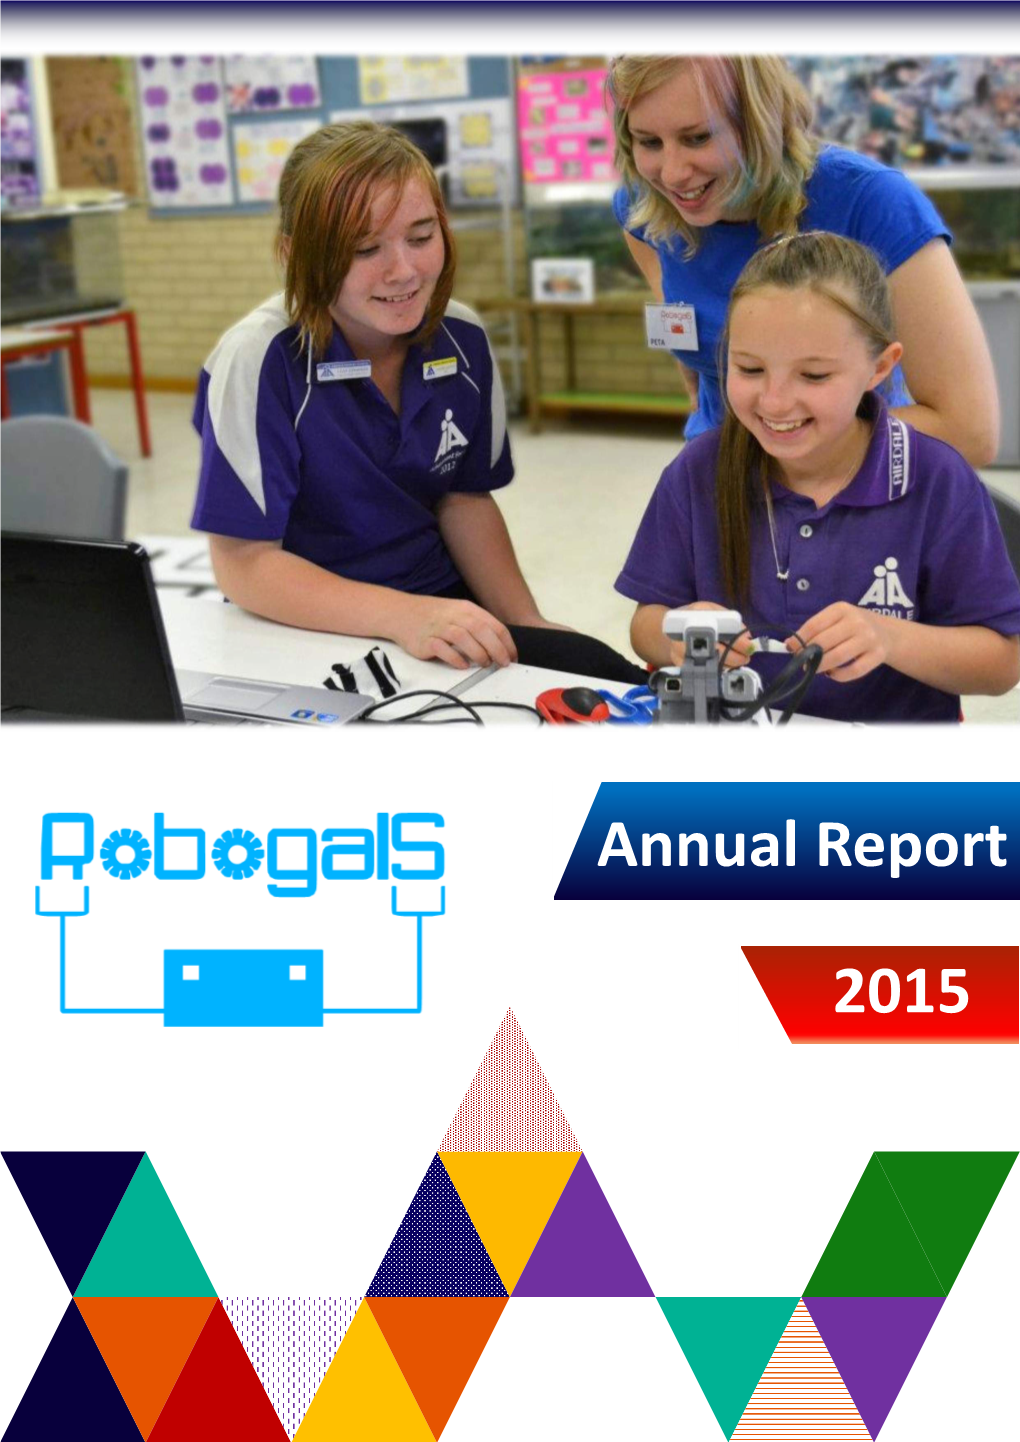 Robogals Global Annual Report 2015